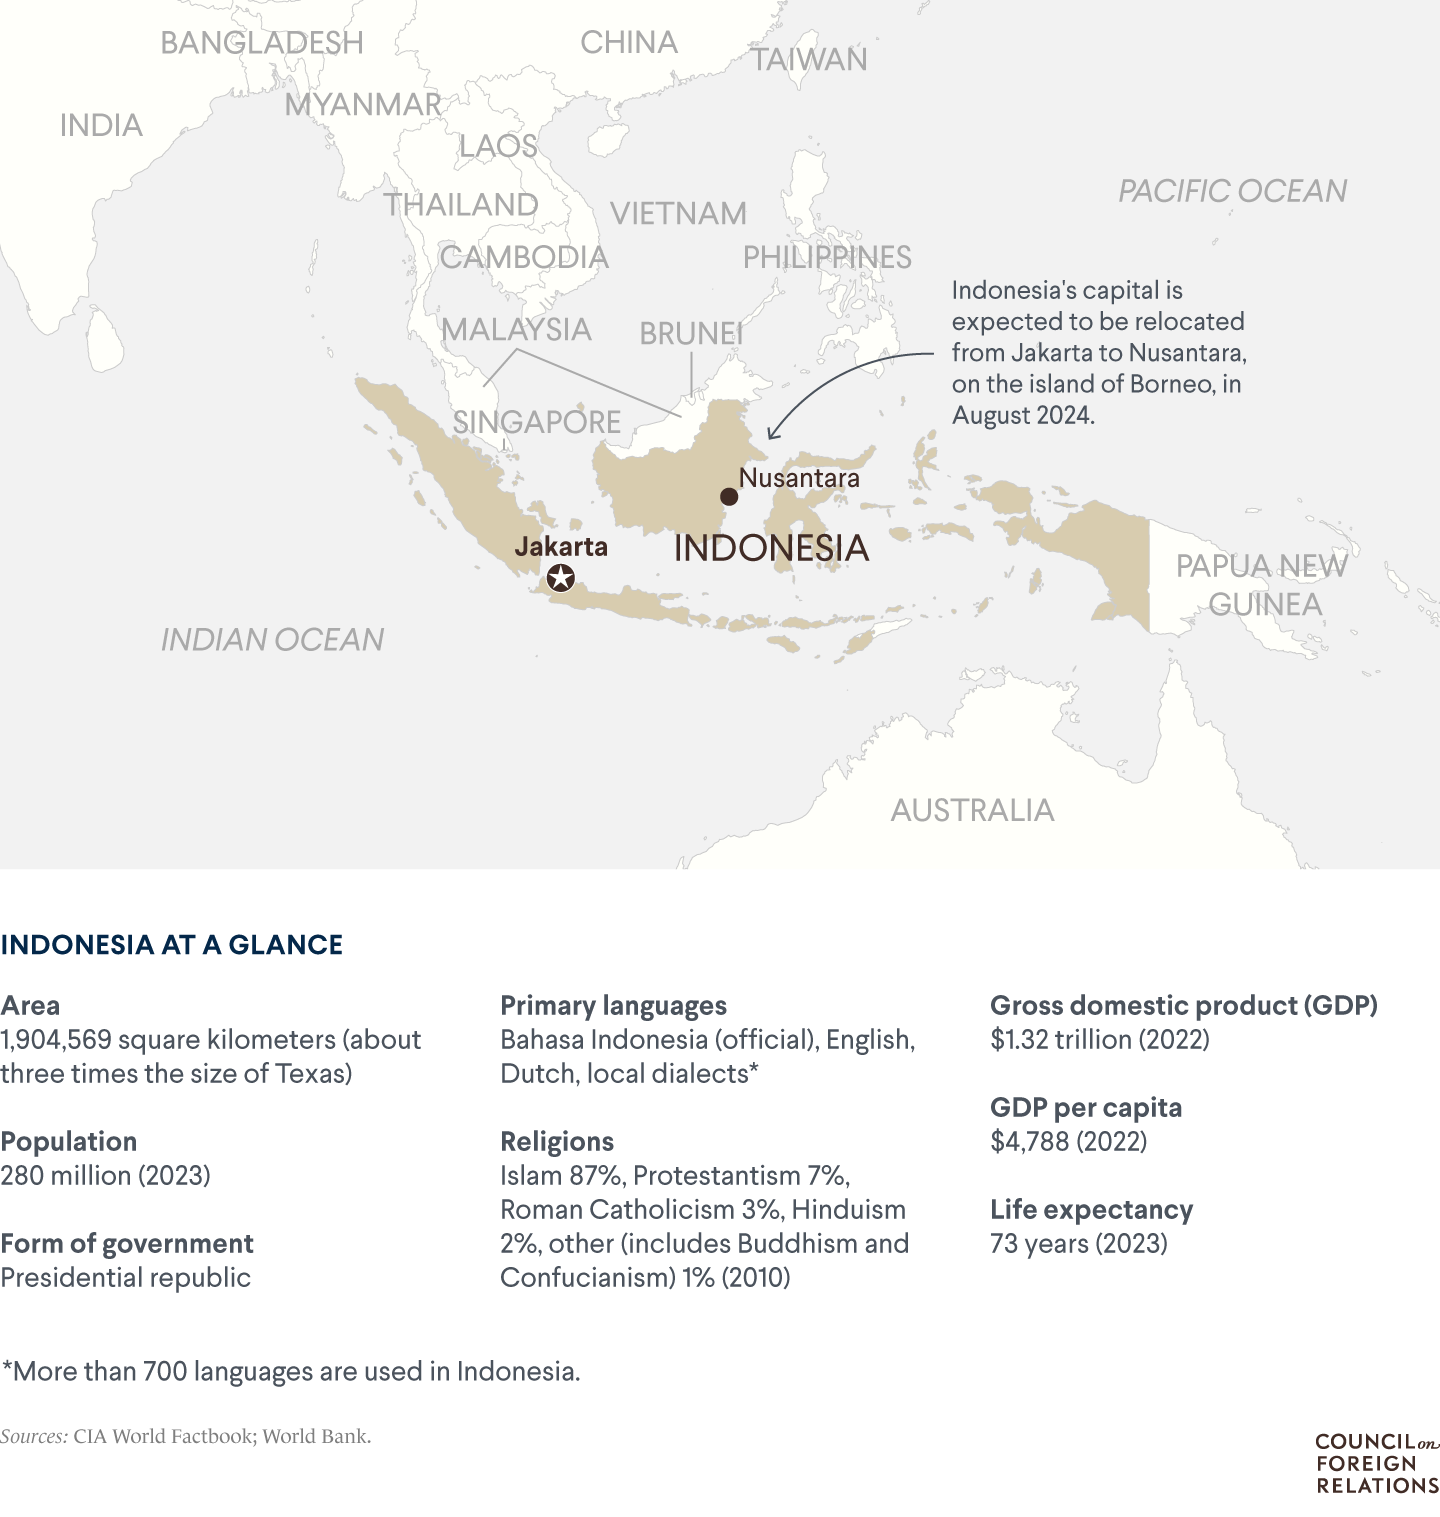 Peta Indonesia dengan data penting seperti jumlah penduduk (280 juta).